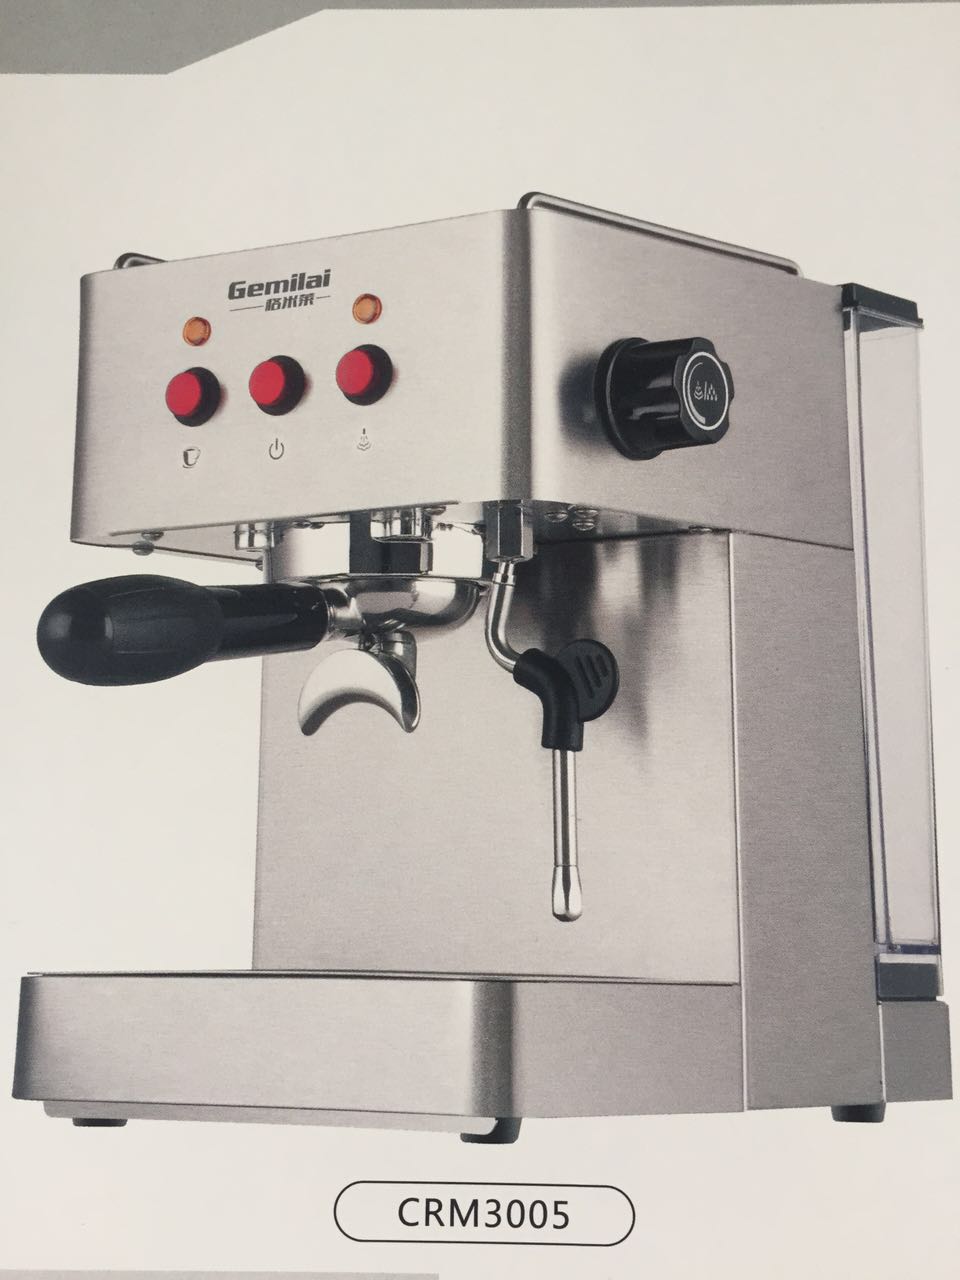 Italian Home Coffee Machine Brand introduction: Gemilai Gemale CRM3005 Home Coffee Machine